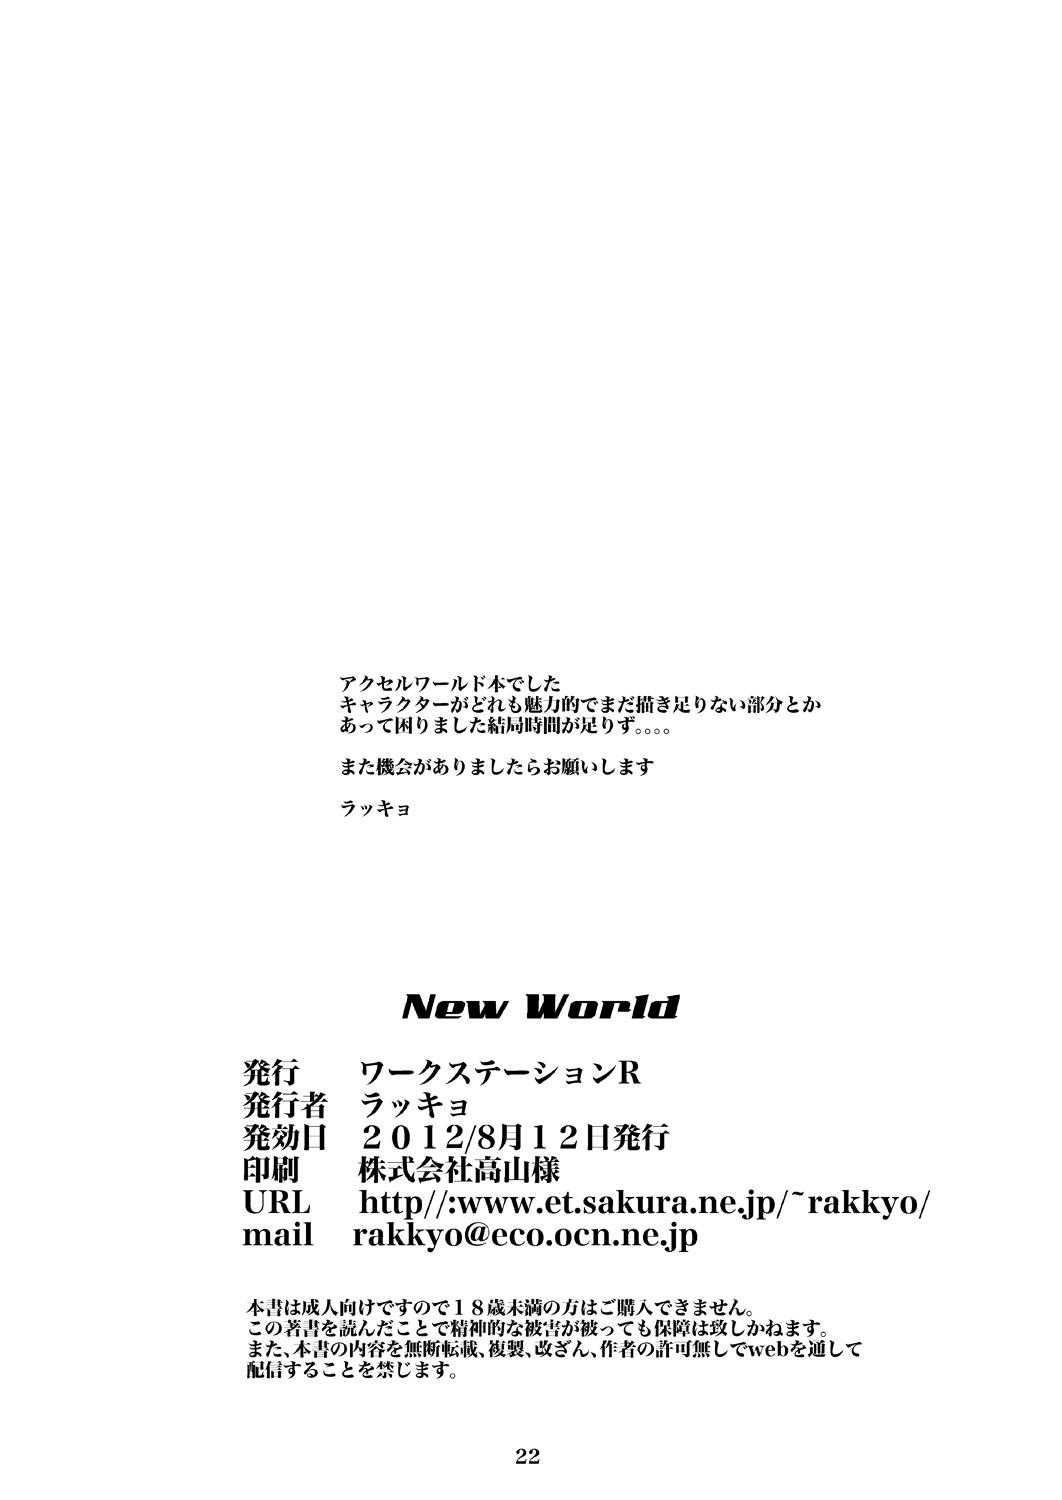 New World 19